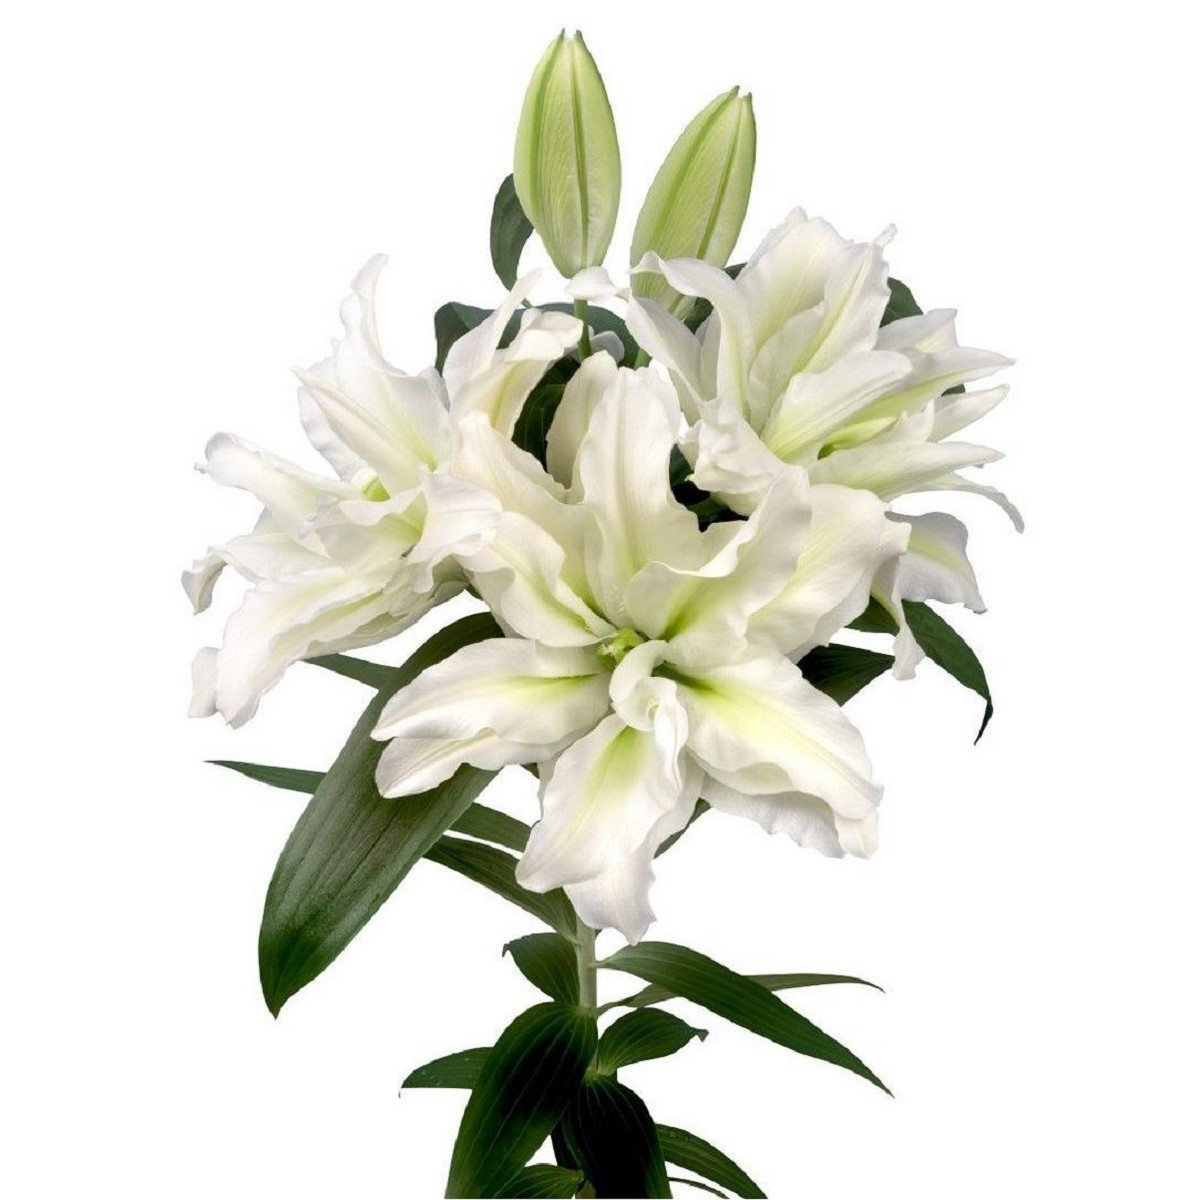 Lilie plnokvětá Roselily Aisha - Lilium - cibule lilie - 1 ks